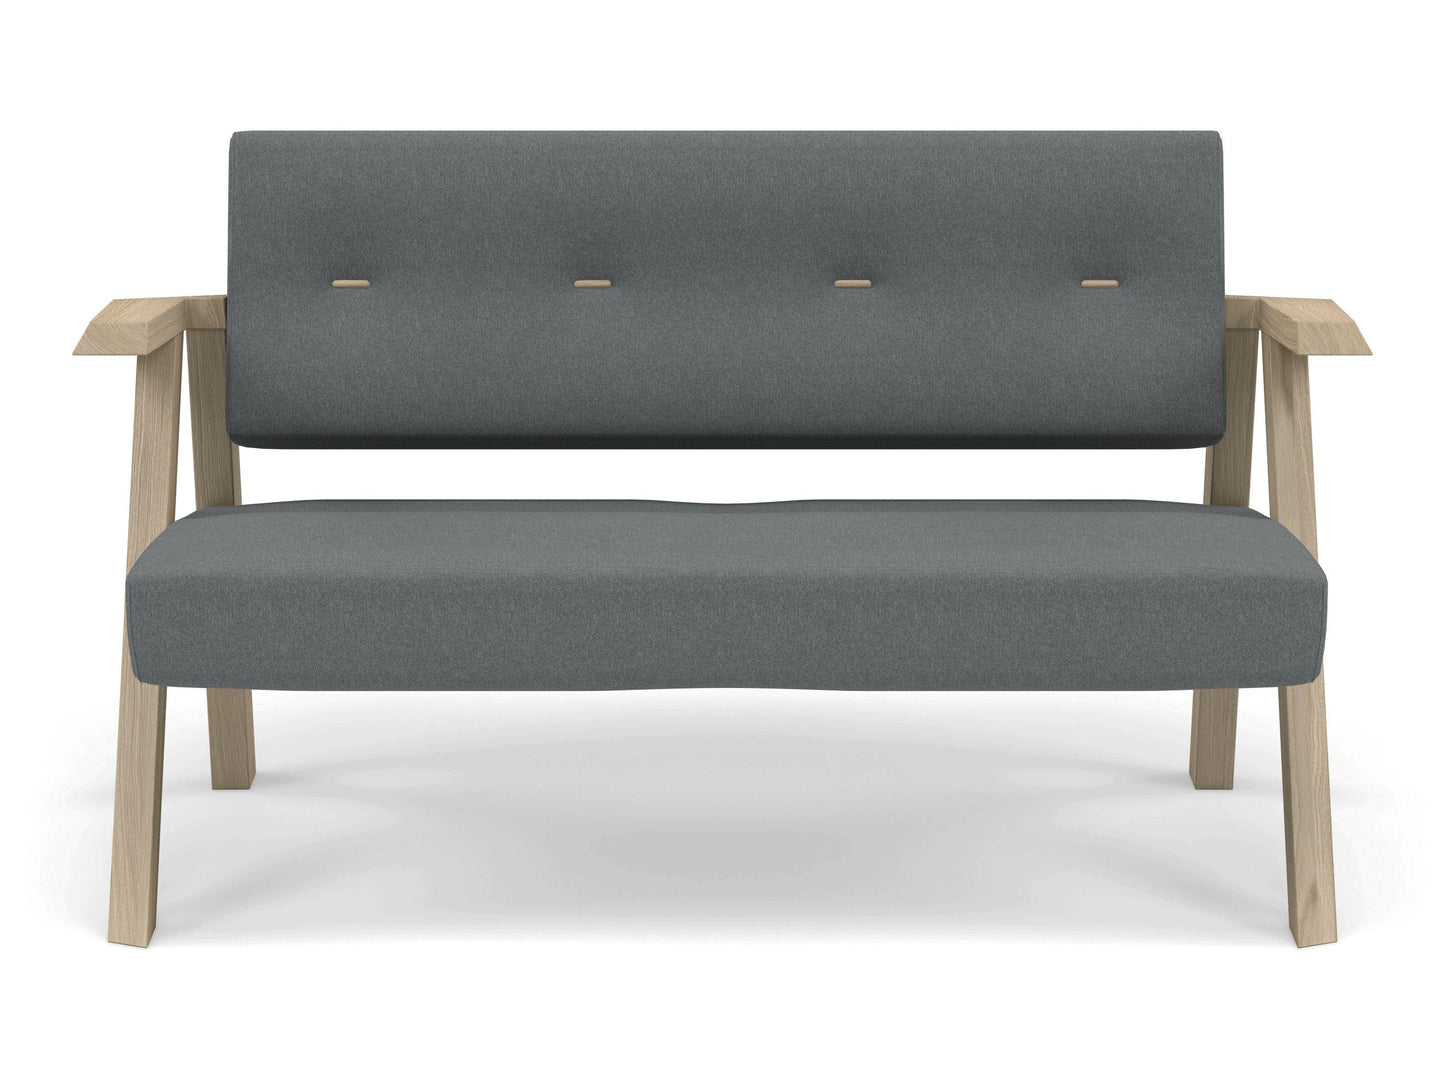 Classic Mid-century Design 2 Seater Sofa Armchair with Buttons in Sea Spray Blue Fabric-Natural Oak-Distinct Designs (London) Ltd